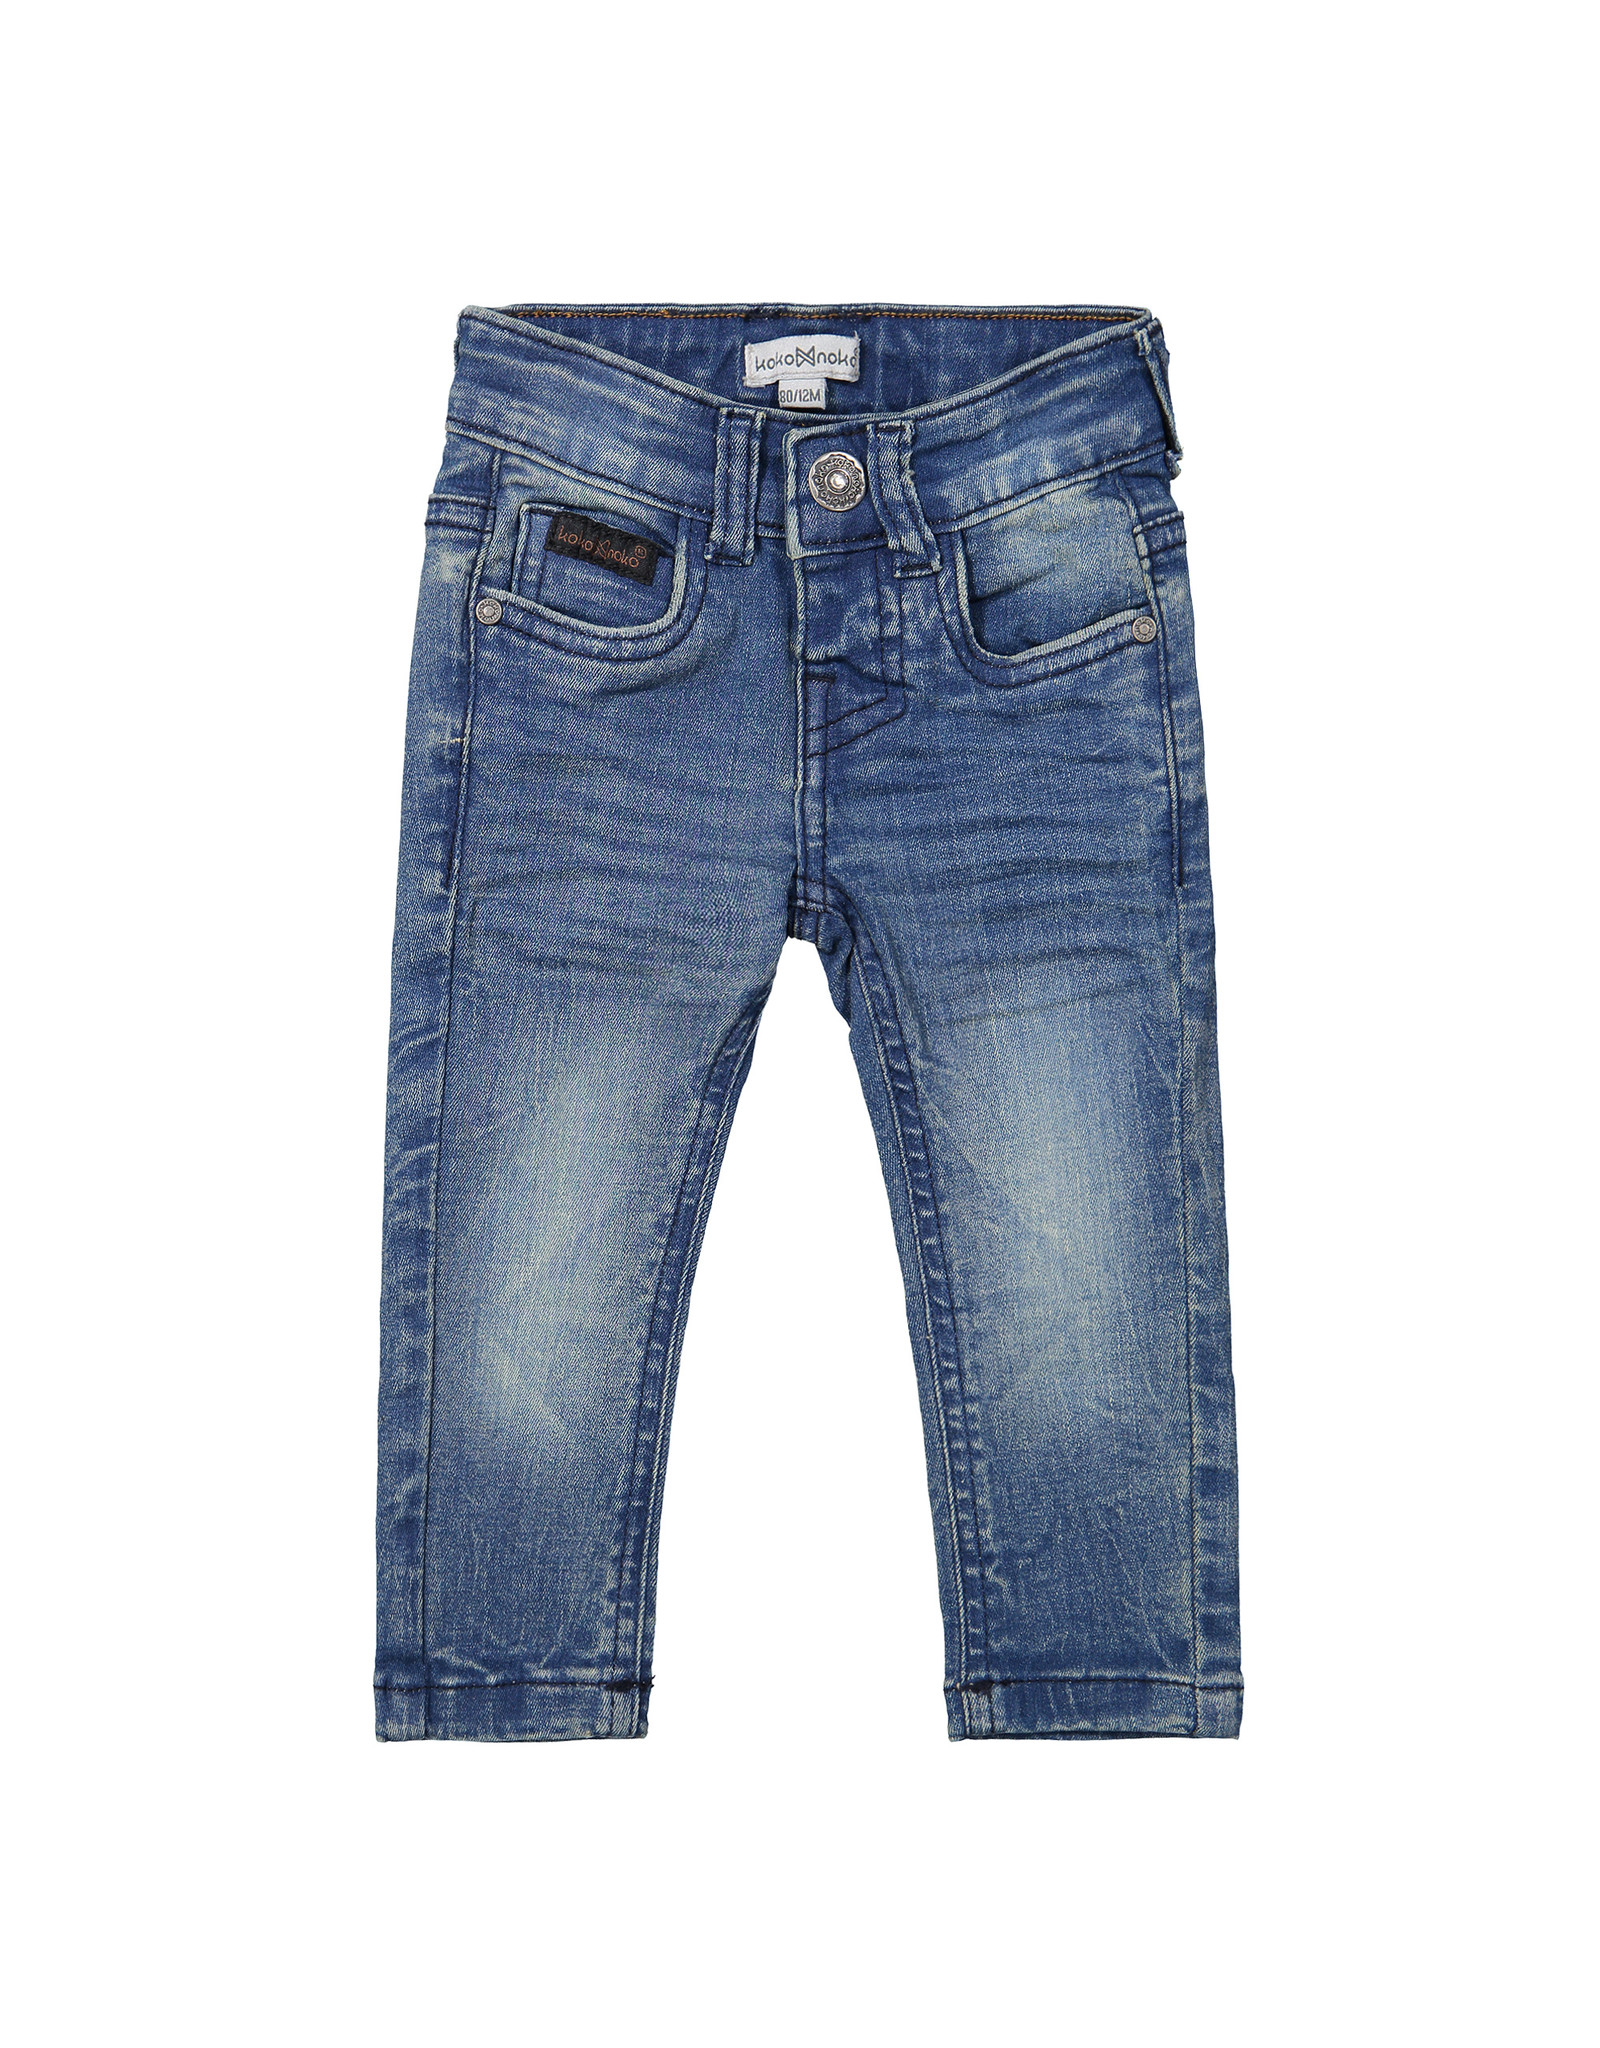 Koko Noko Boys Jeans, Blue jeans, F40802-37